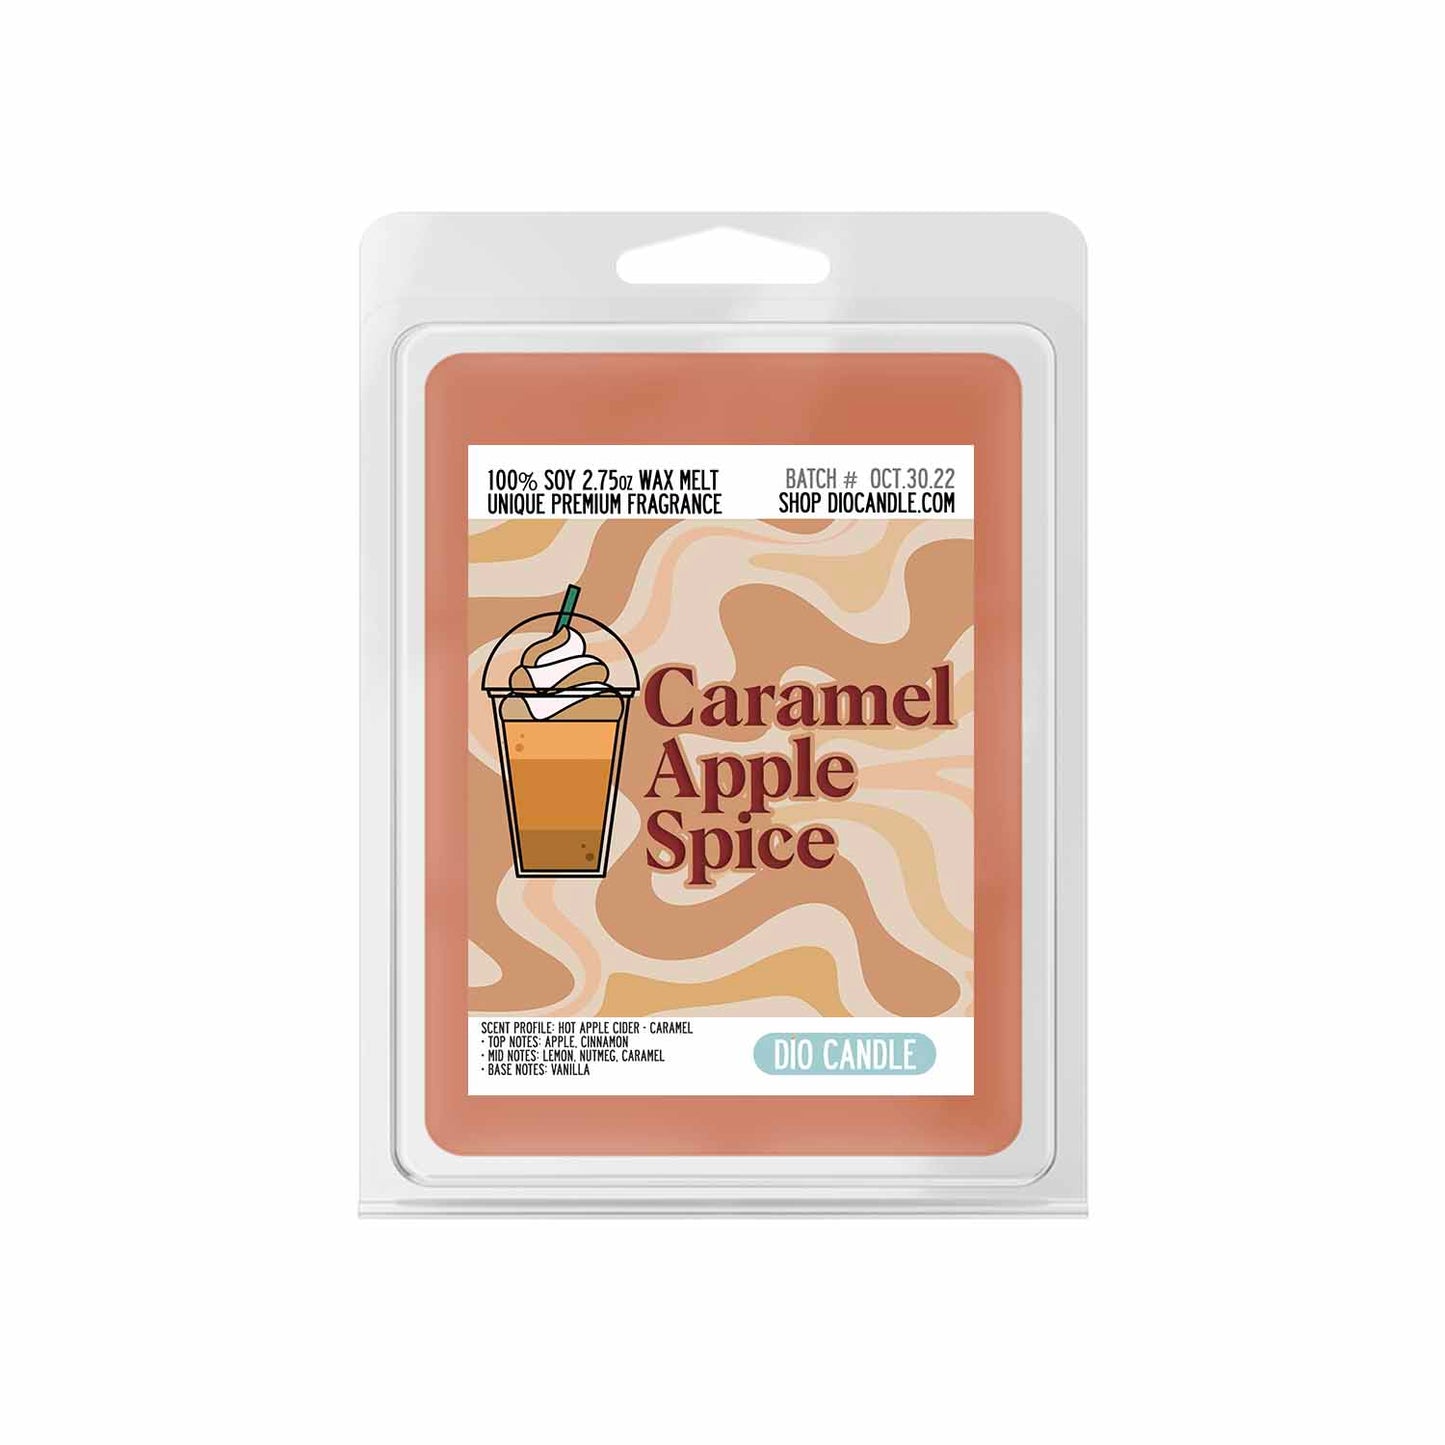 Caramel Apple Spice Candle